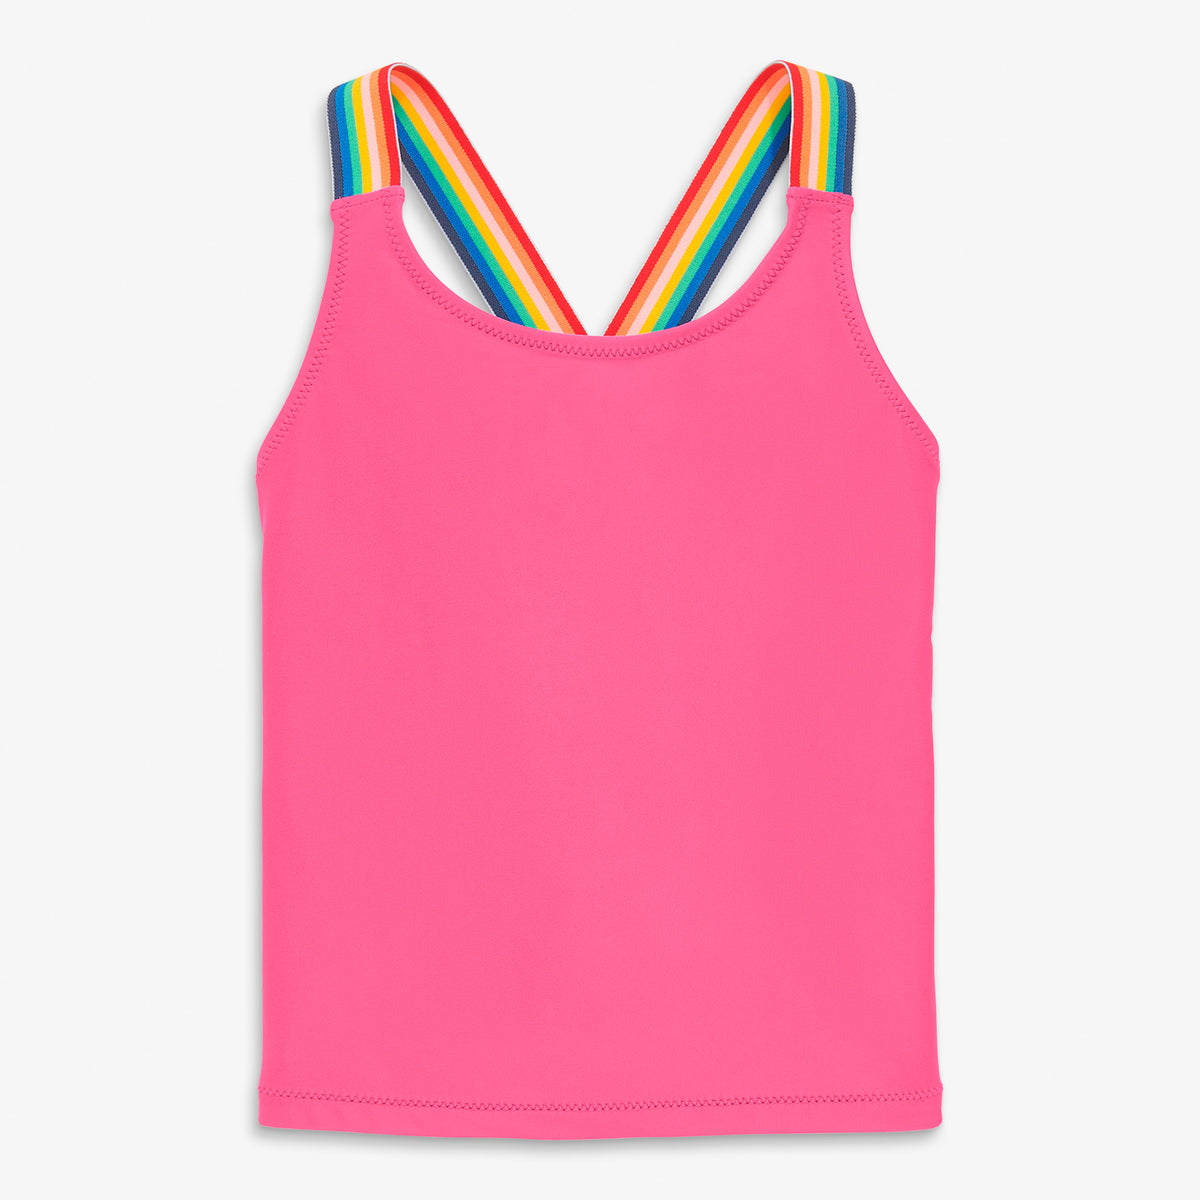 Swim top with rainbow trim | Primary.com